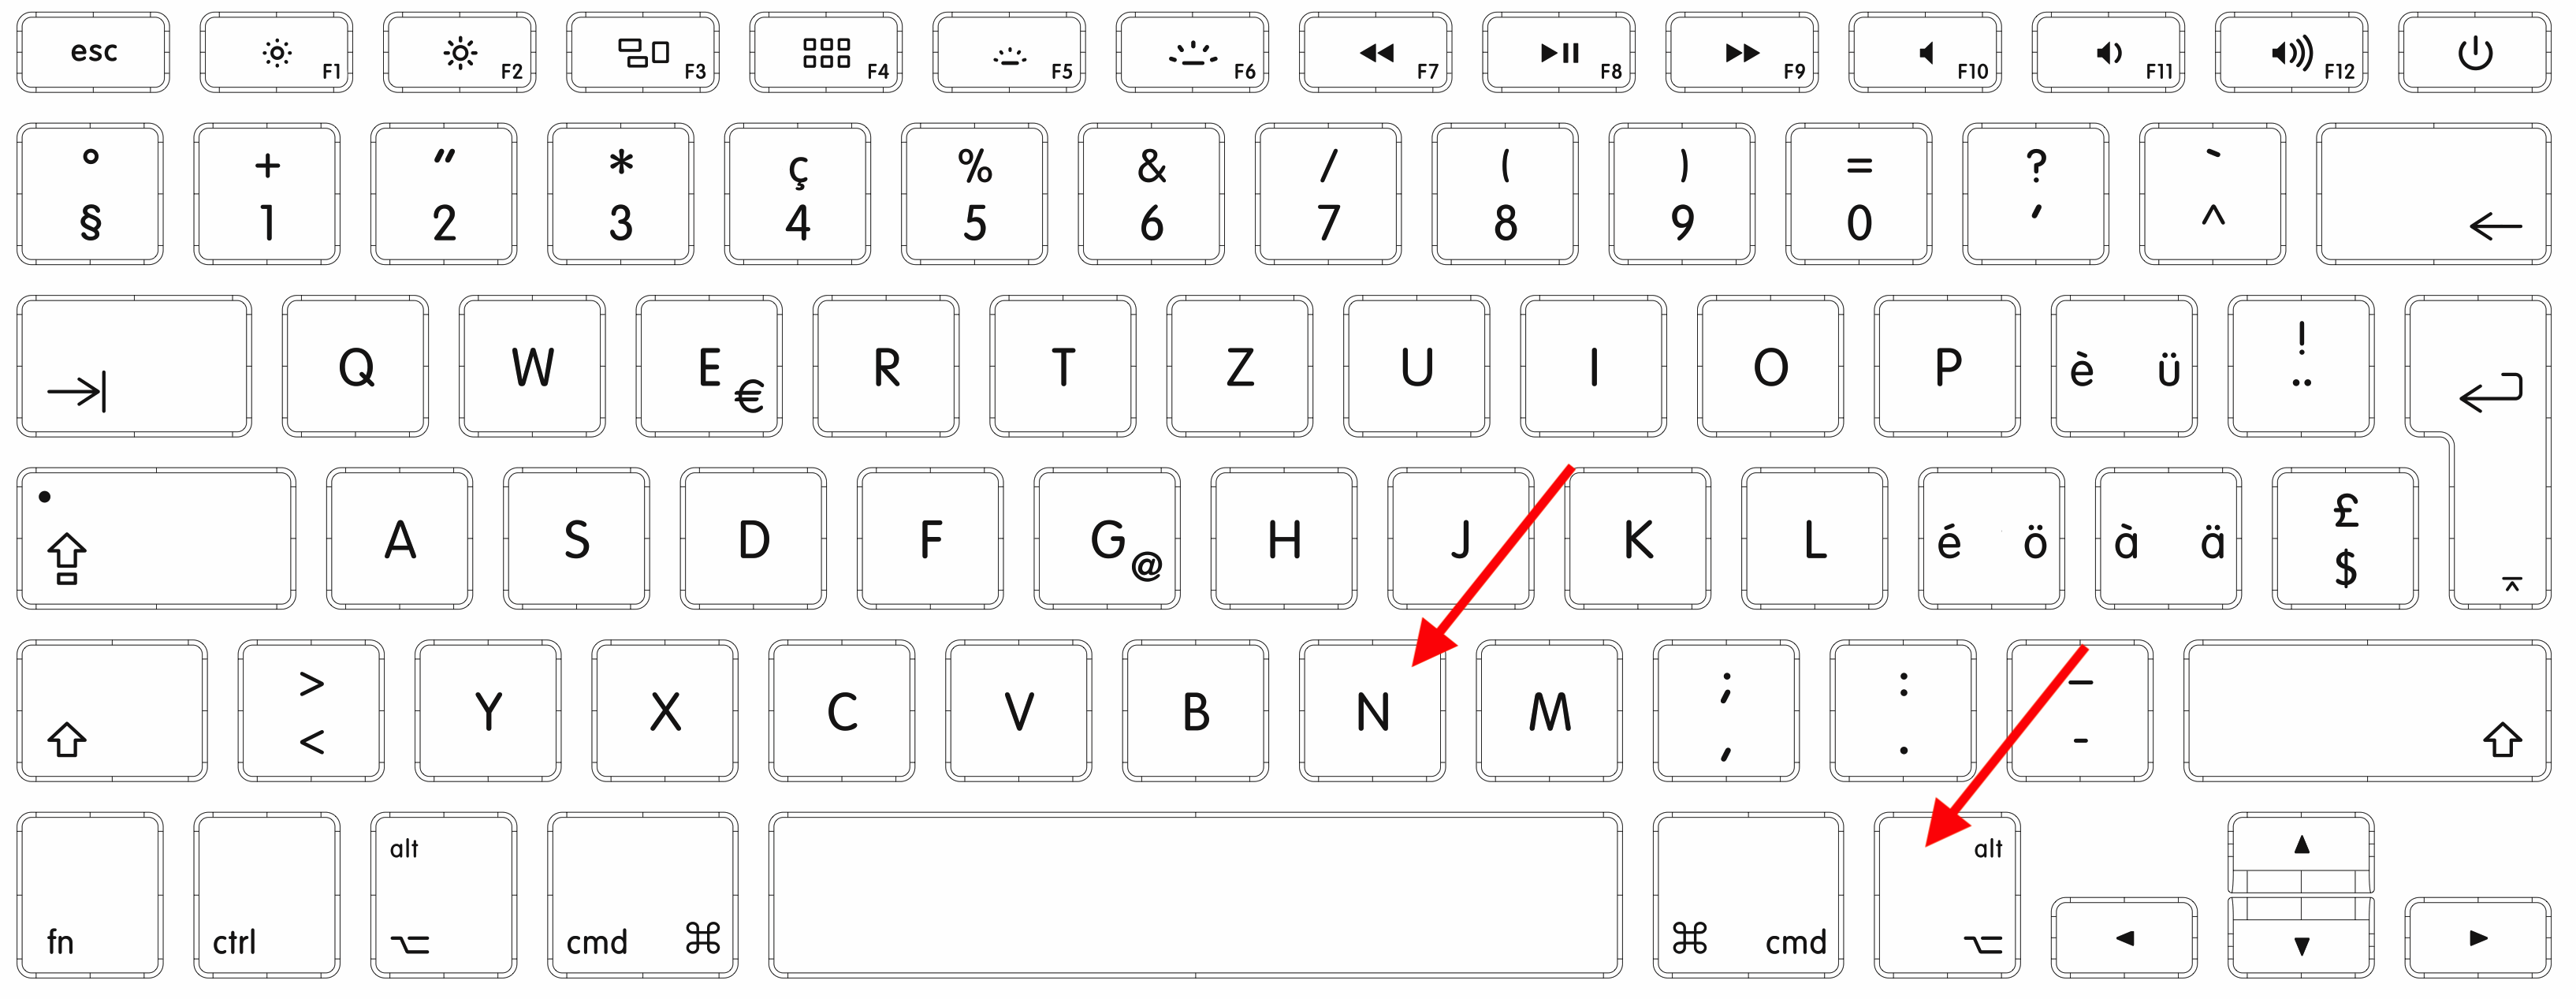 degree symbol on keyboard